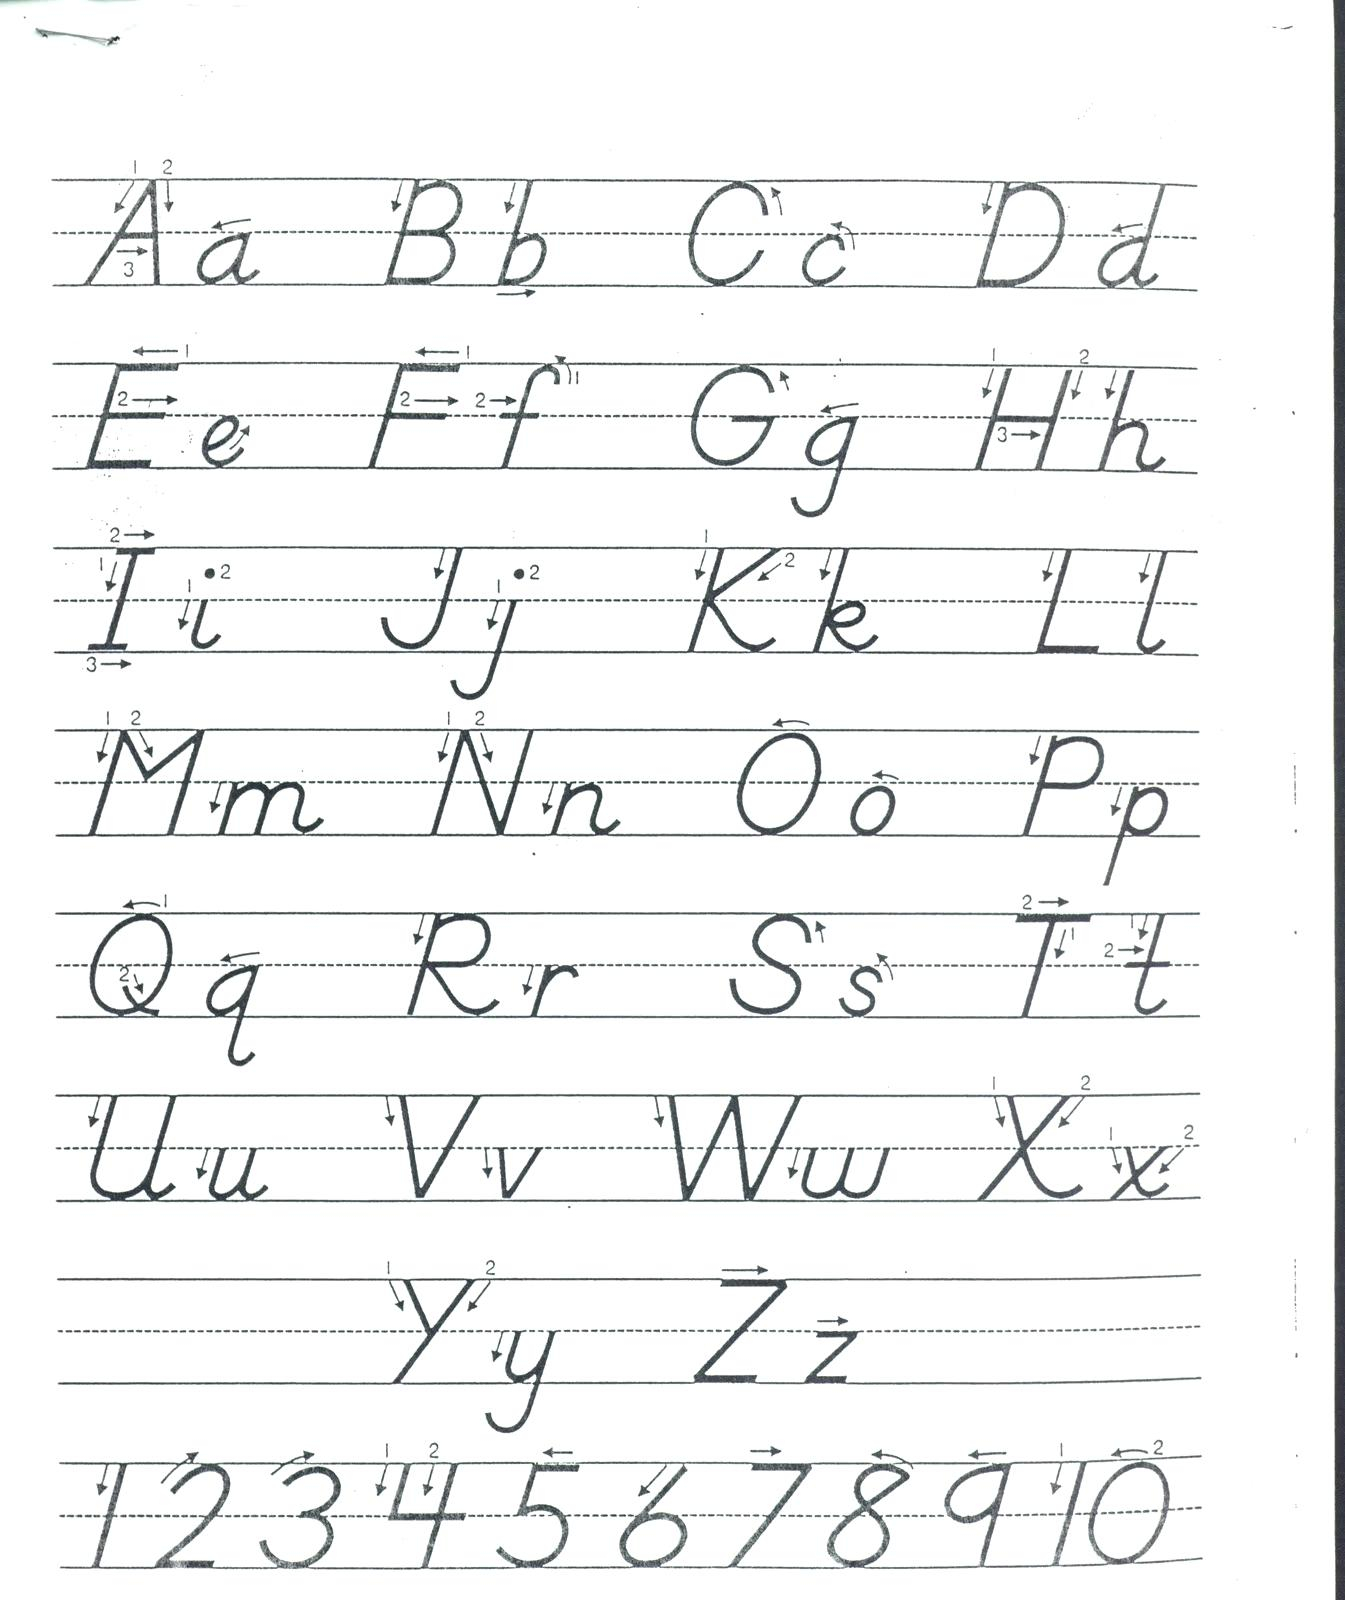 d-nealian-cursive-alphabet-printable-alphabetworksheetsfree